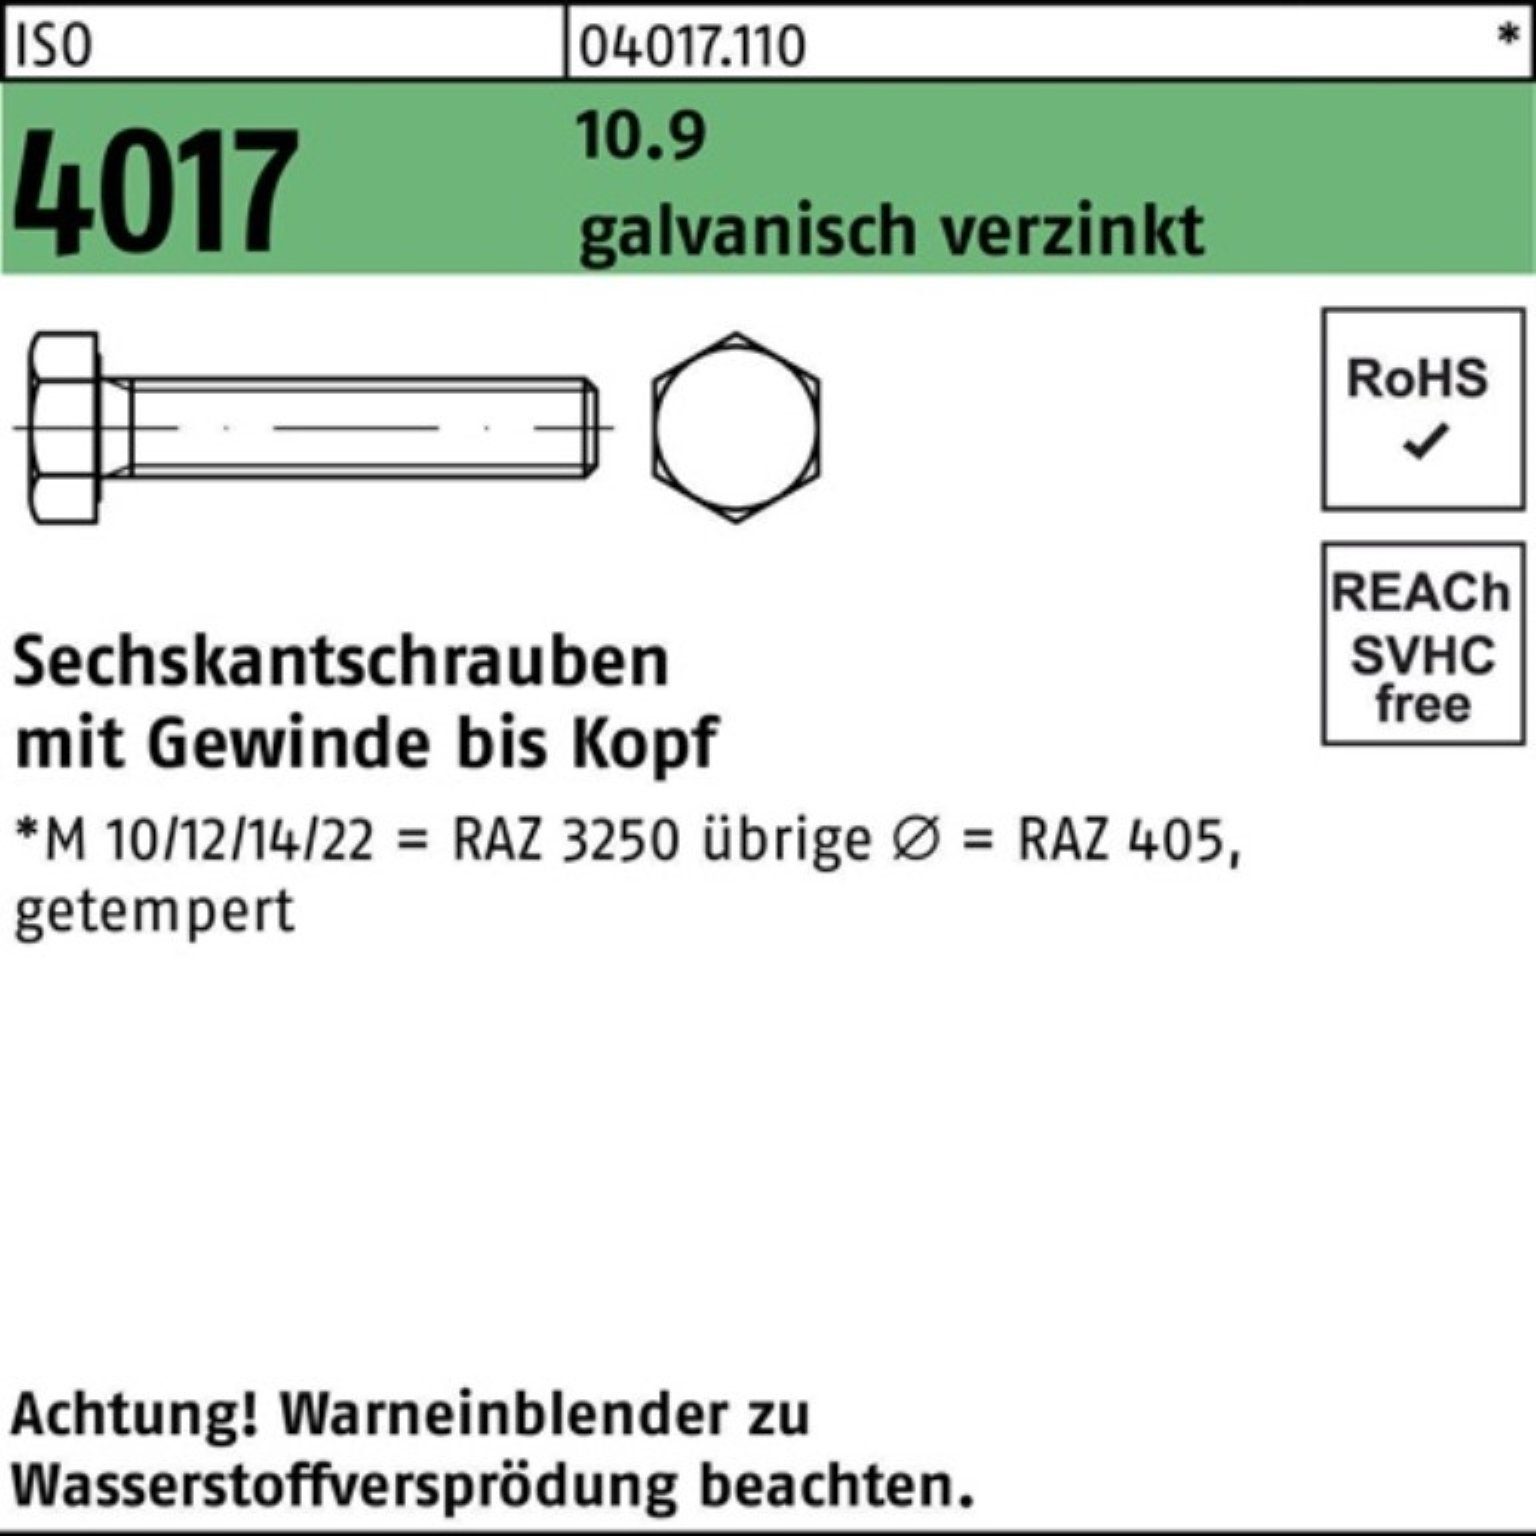 Pack St Sechskantschraube M30x 140 Bufab 4017 galv.verz. 1 10.9 Sechskantschraube ISO VG 100er